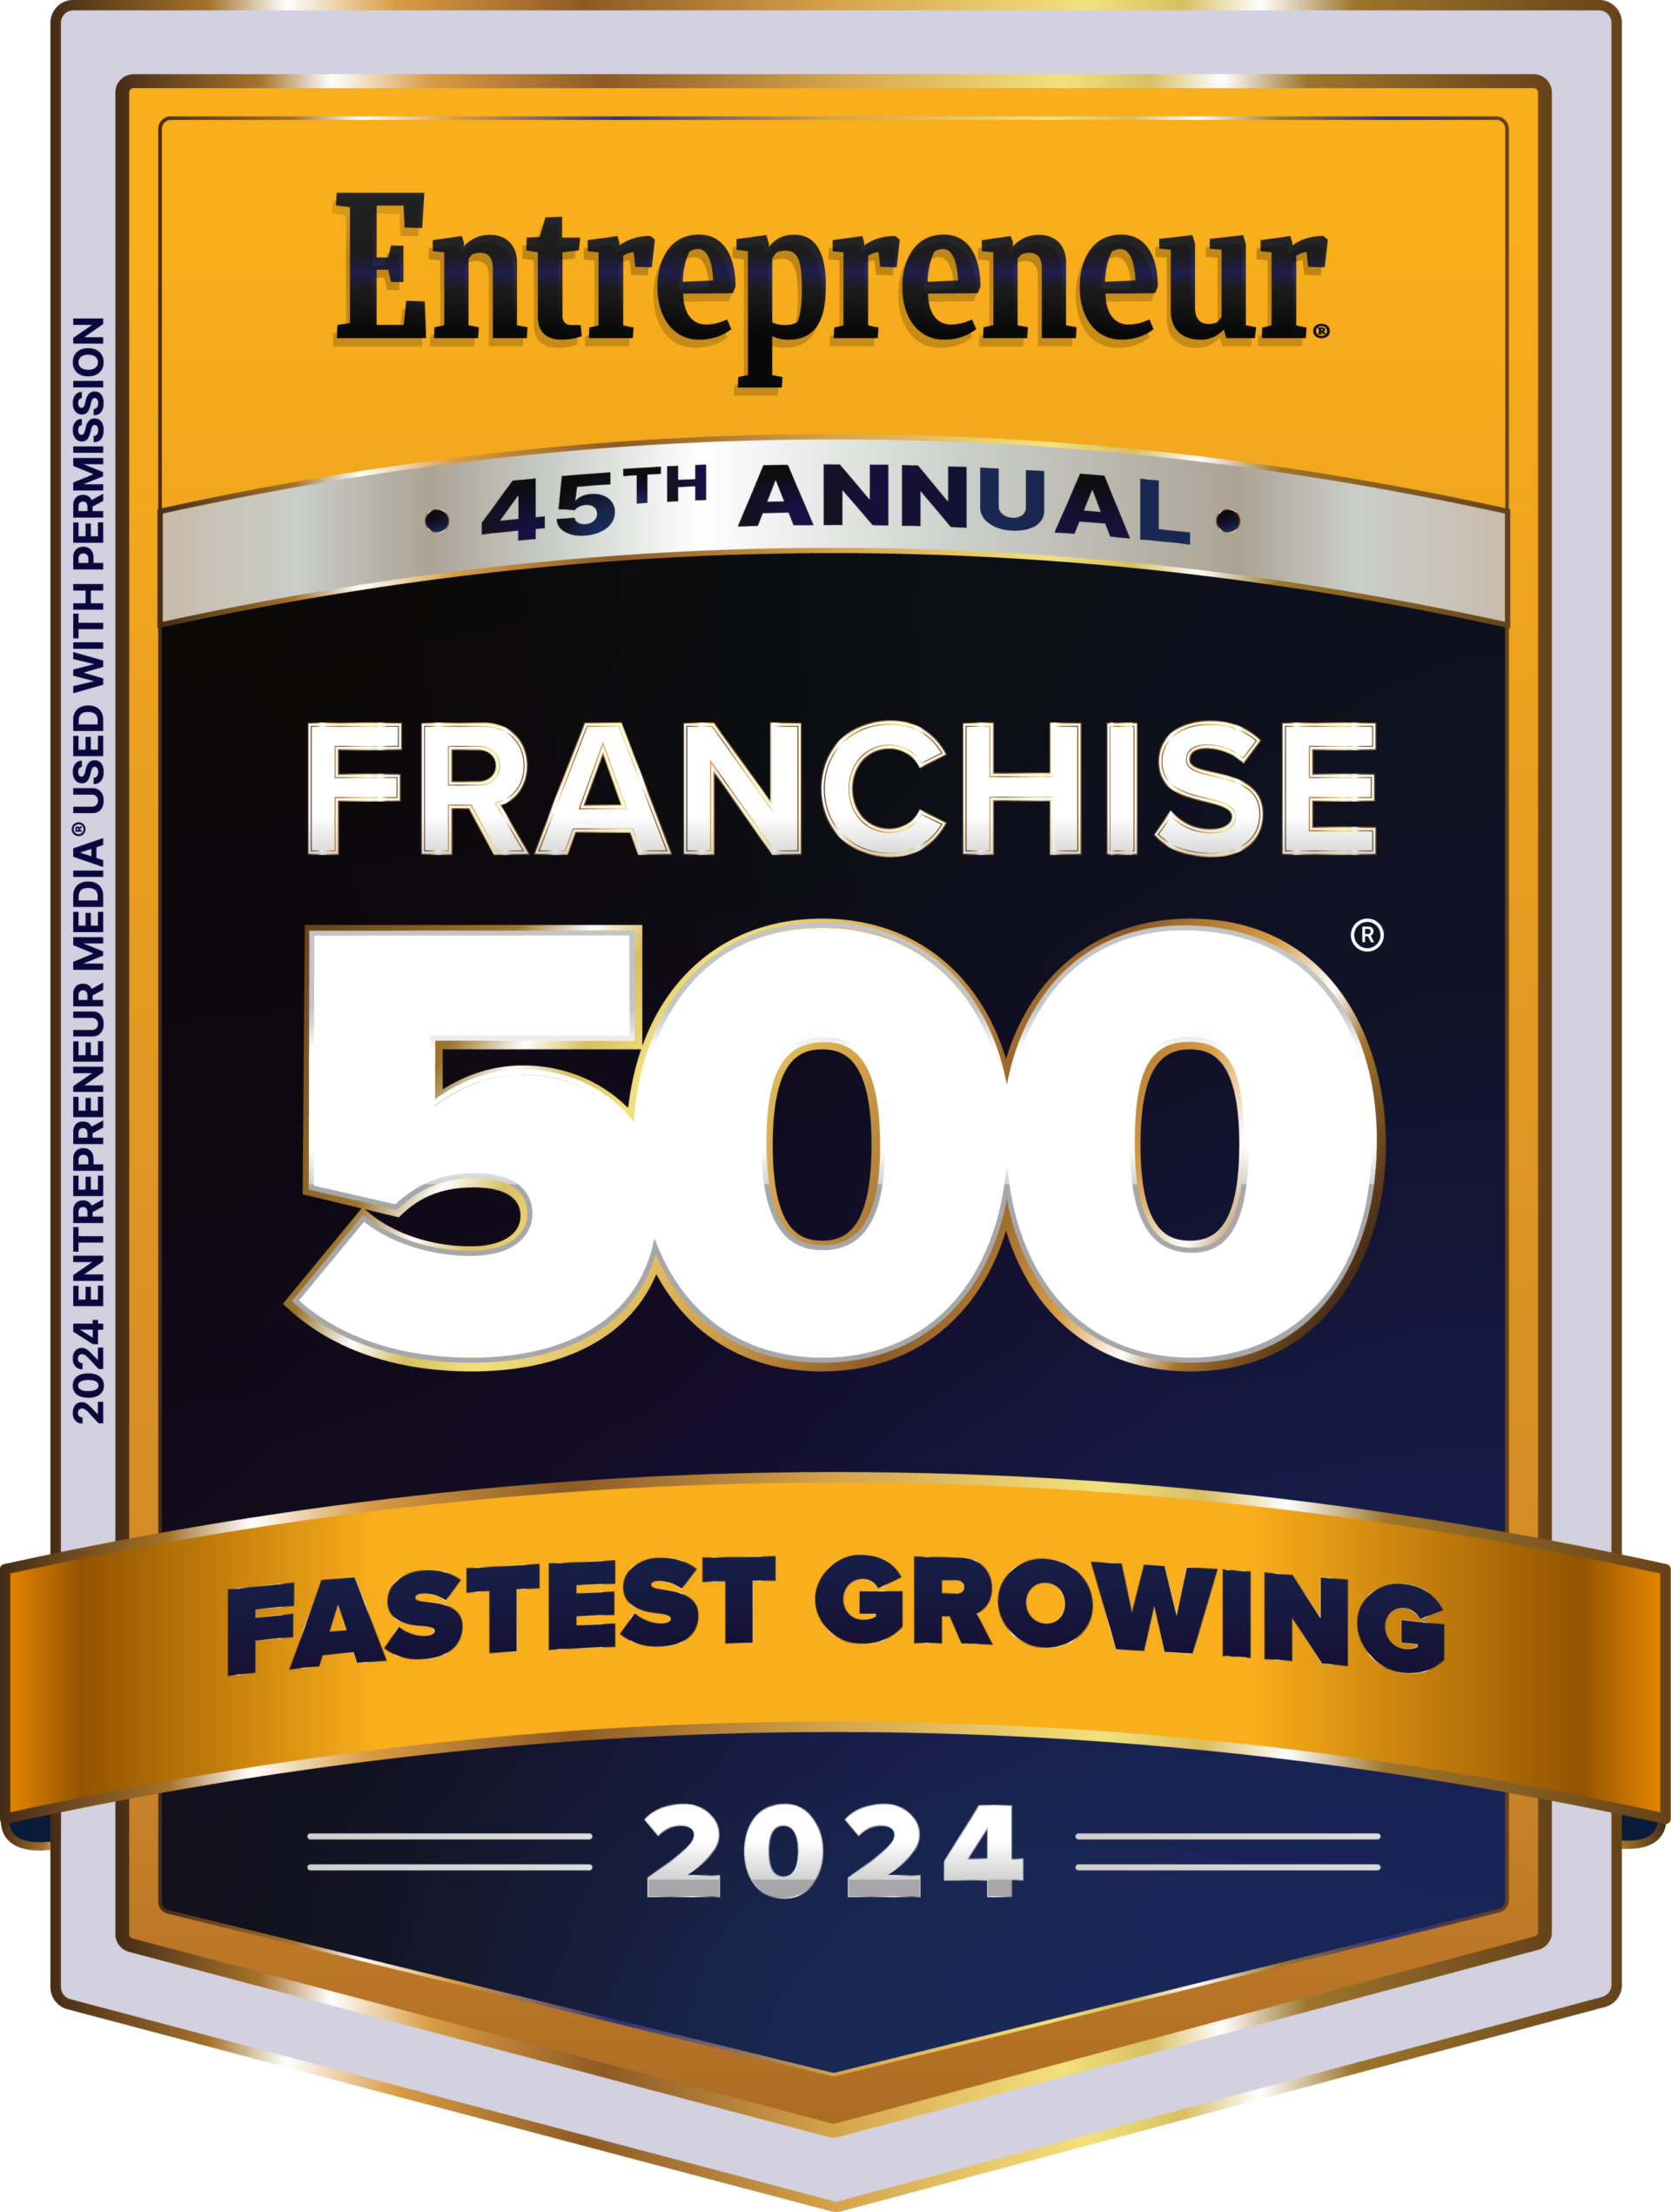 Entrepreneur FRANCHISE 500 2024 FASTEST GROWING